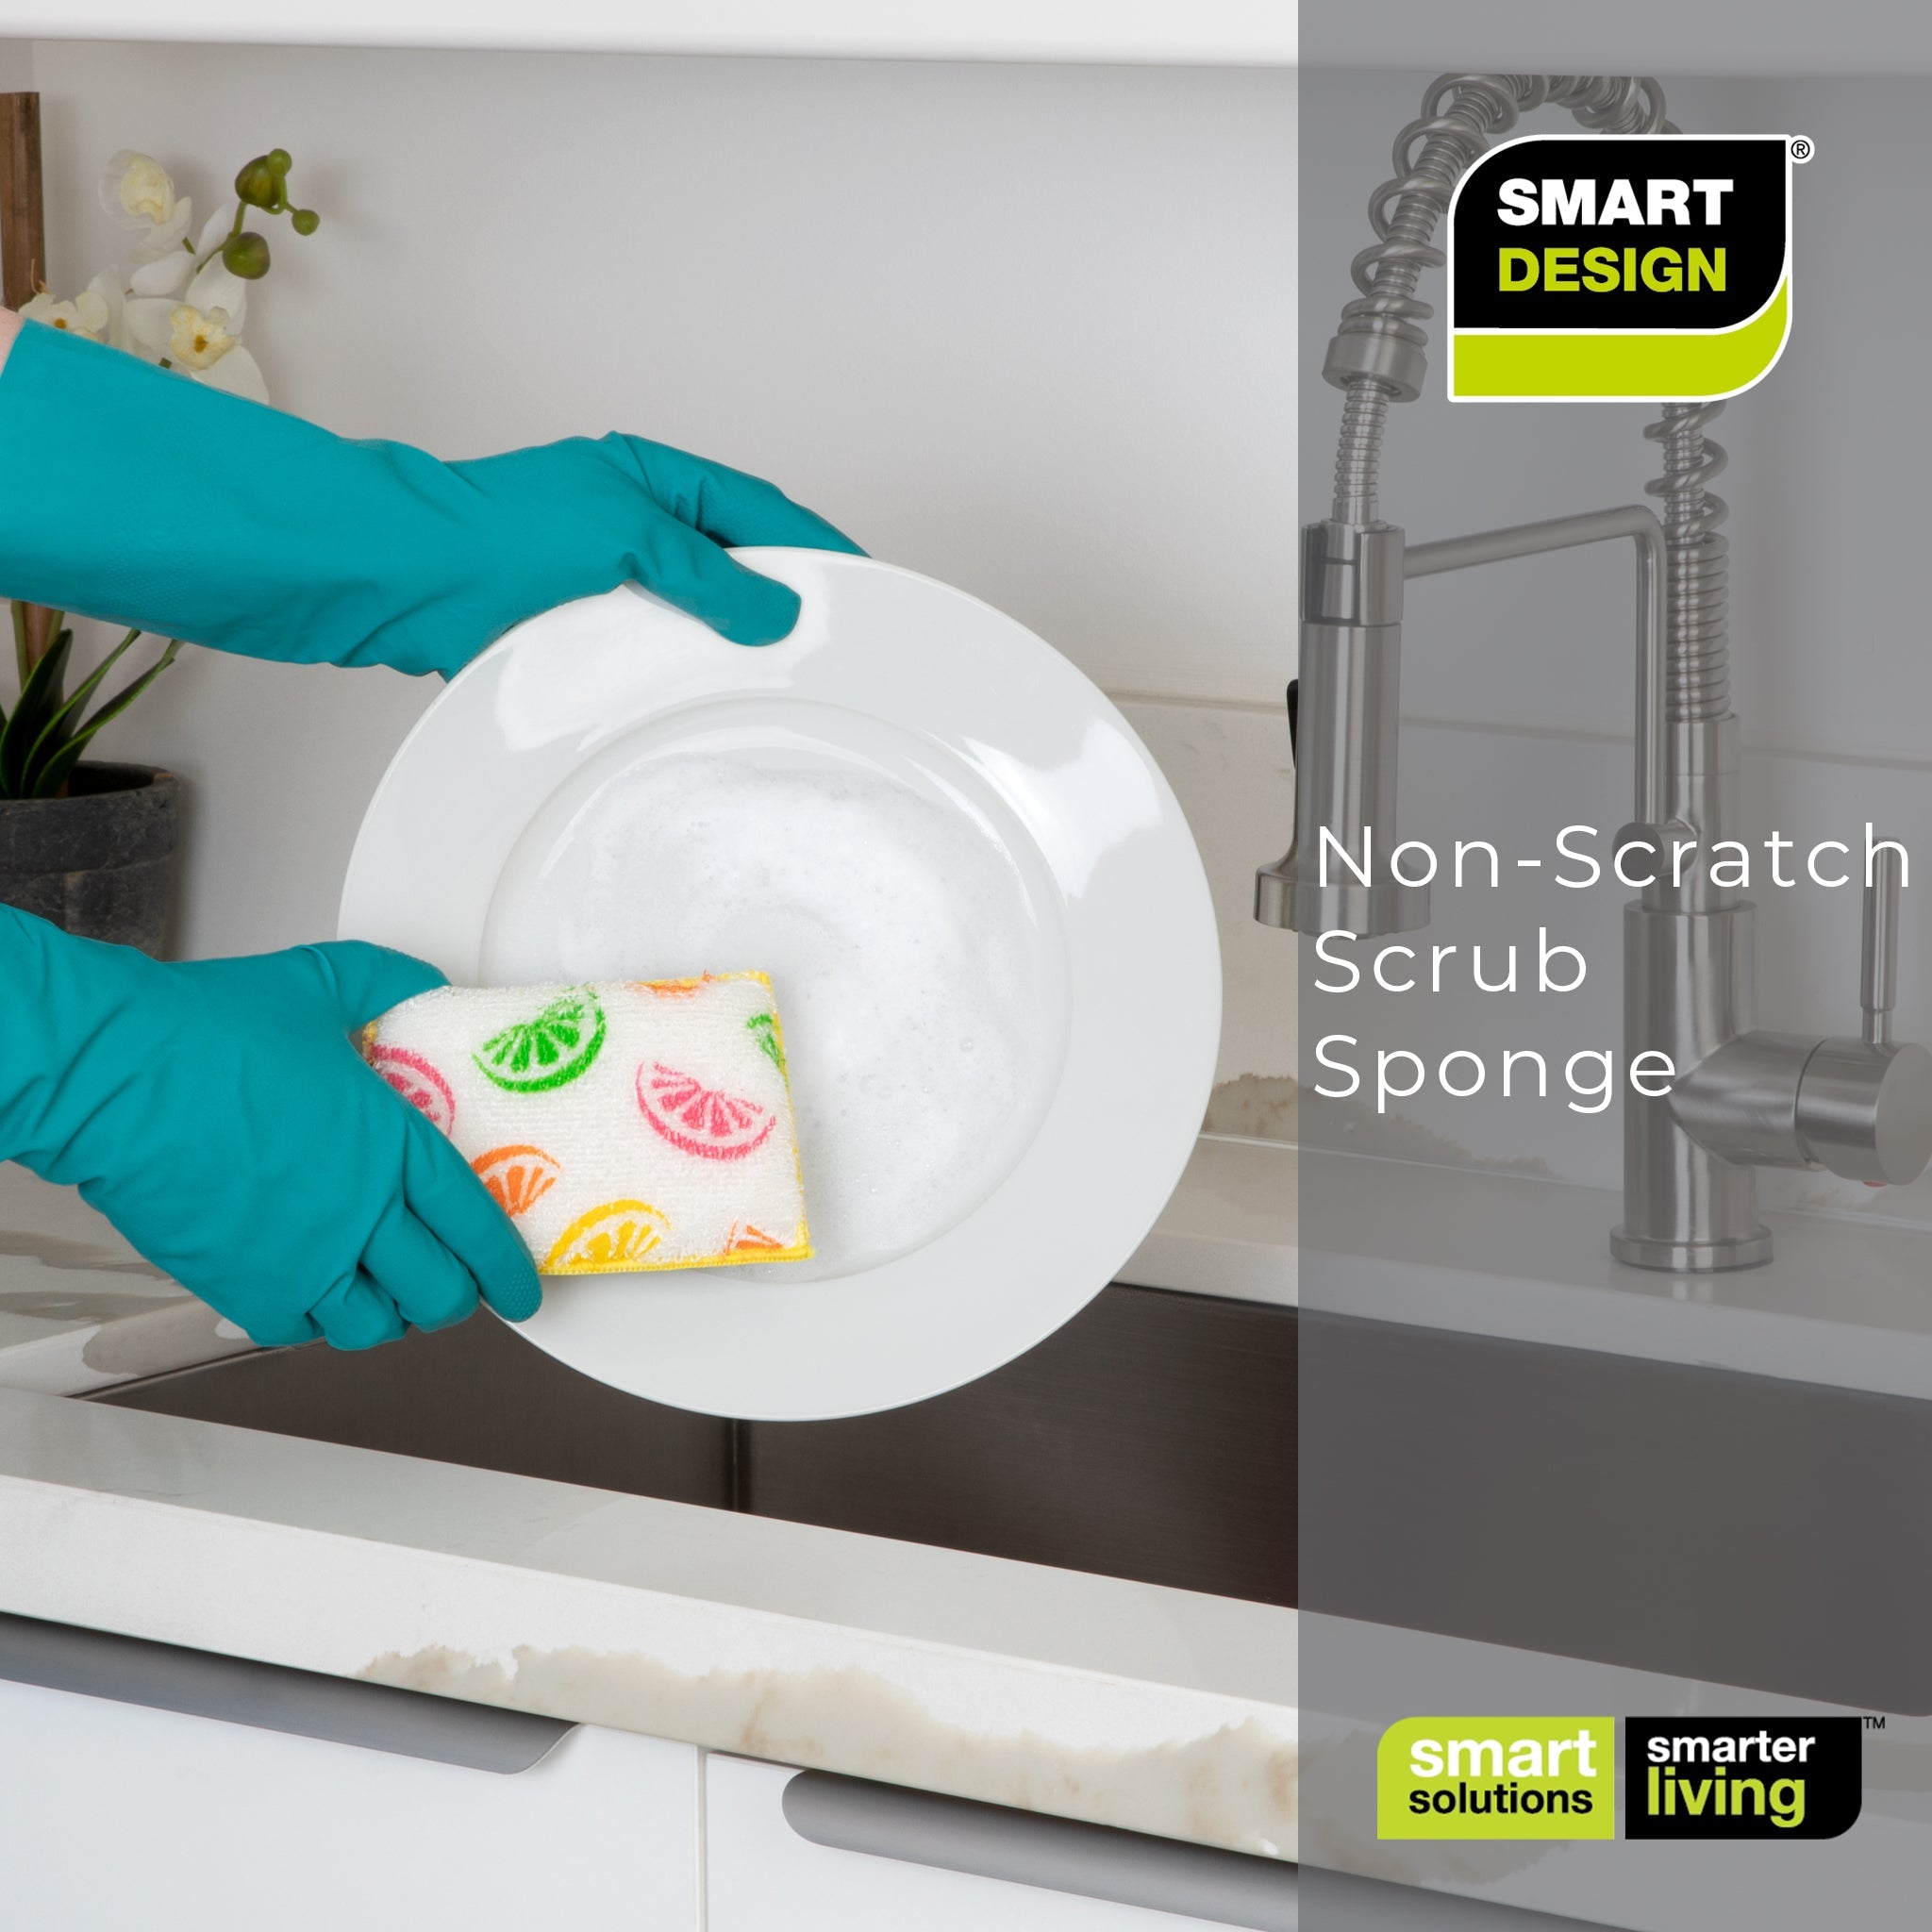 Non-Scratch Scrub Sponge with Bamboo Odorless Rayon Fiber - Smart Design® 26